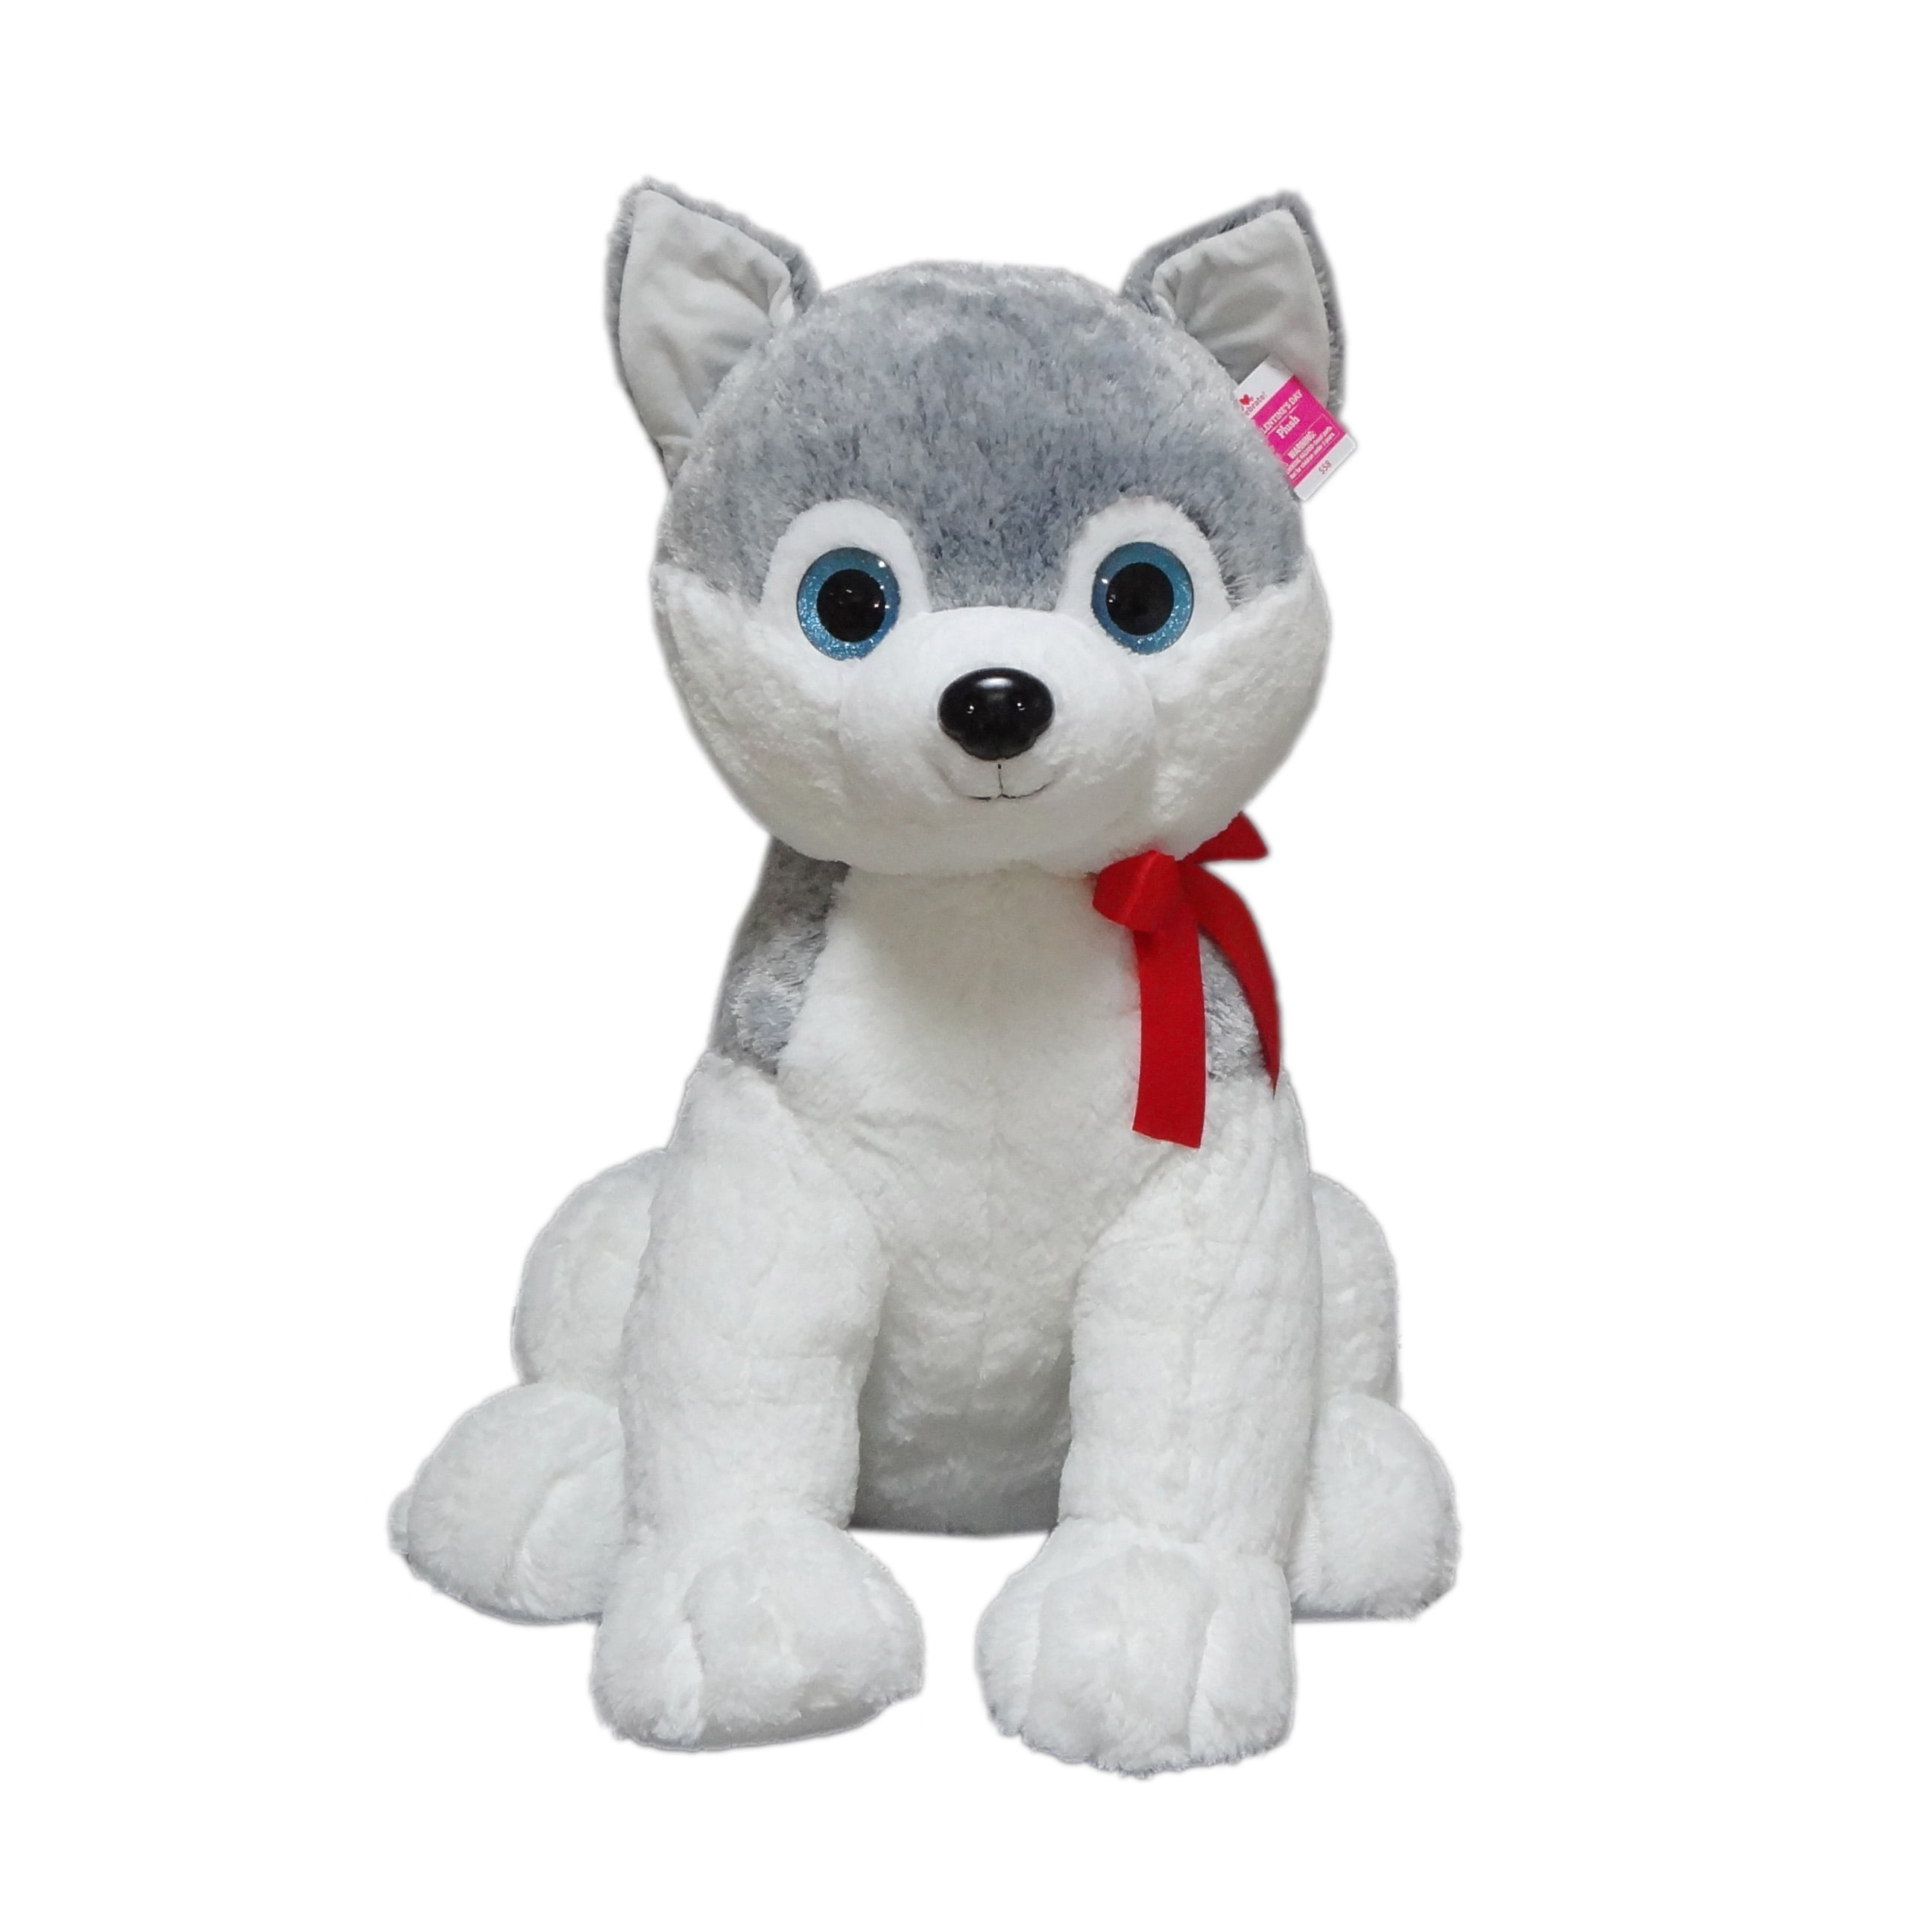 Husky plush toy